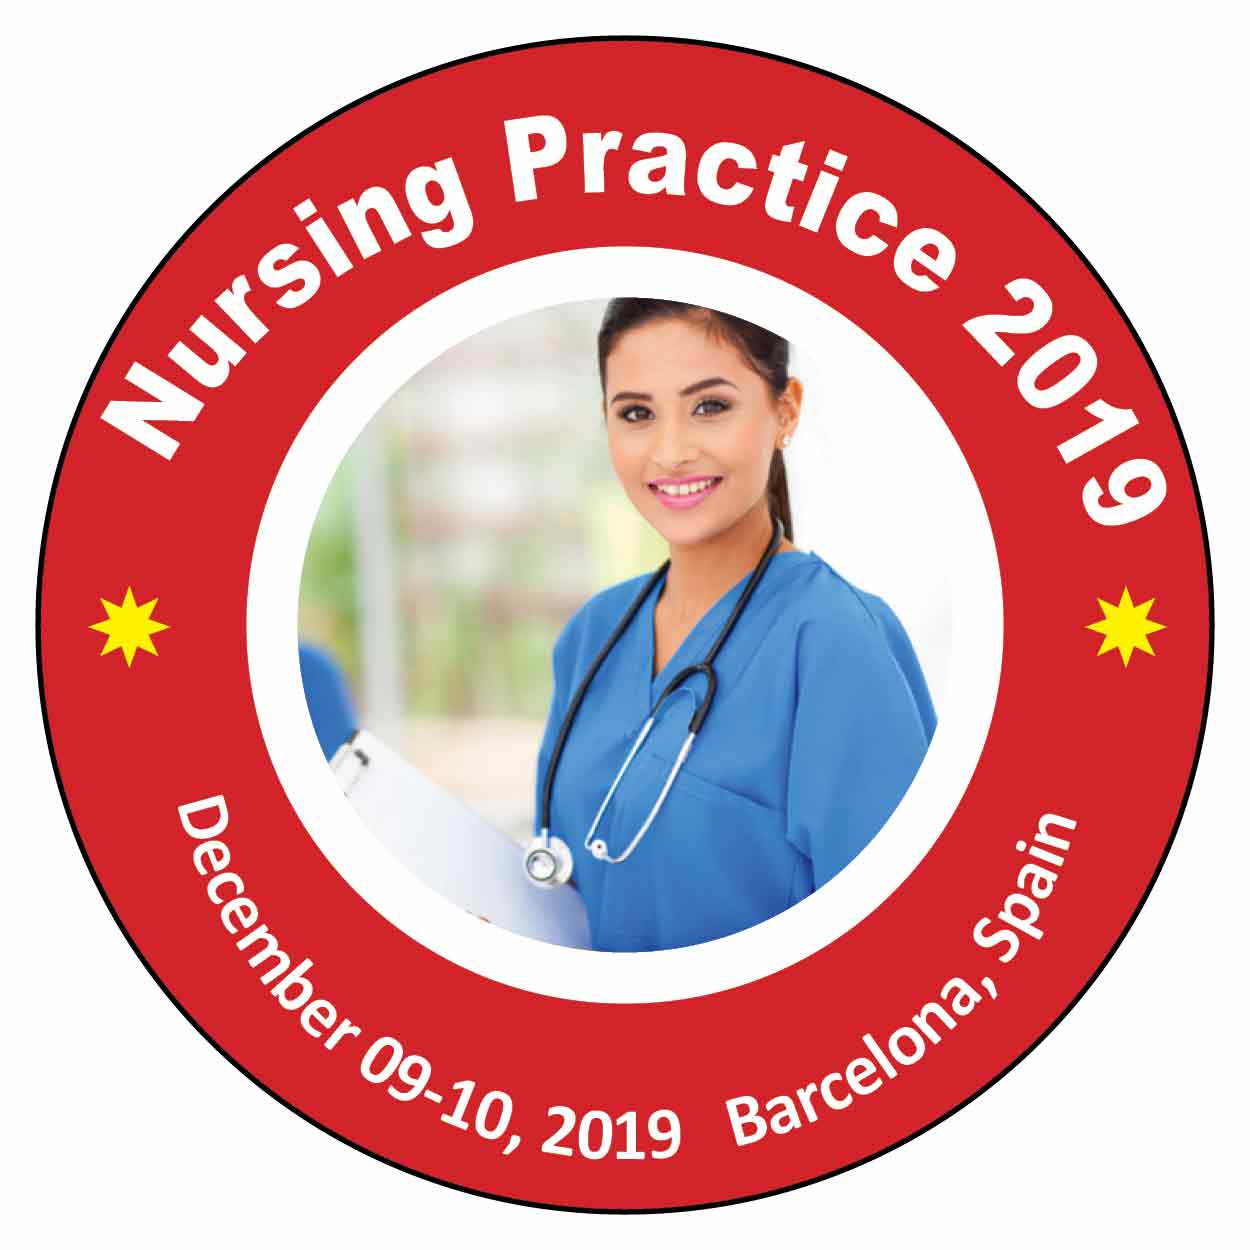 Nursing Conference | Nursing congress | Nursing Practice conferences | Nursing Practice 2019 | Nursing Meetings | Barcelona | Spain | Europe | USA | 2019